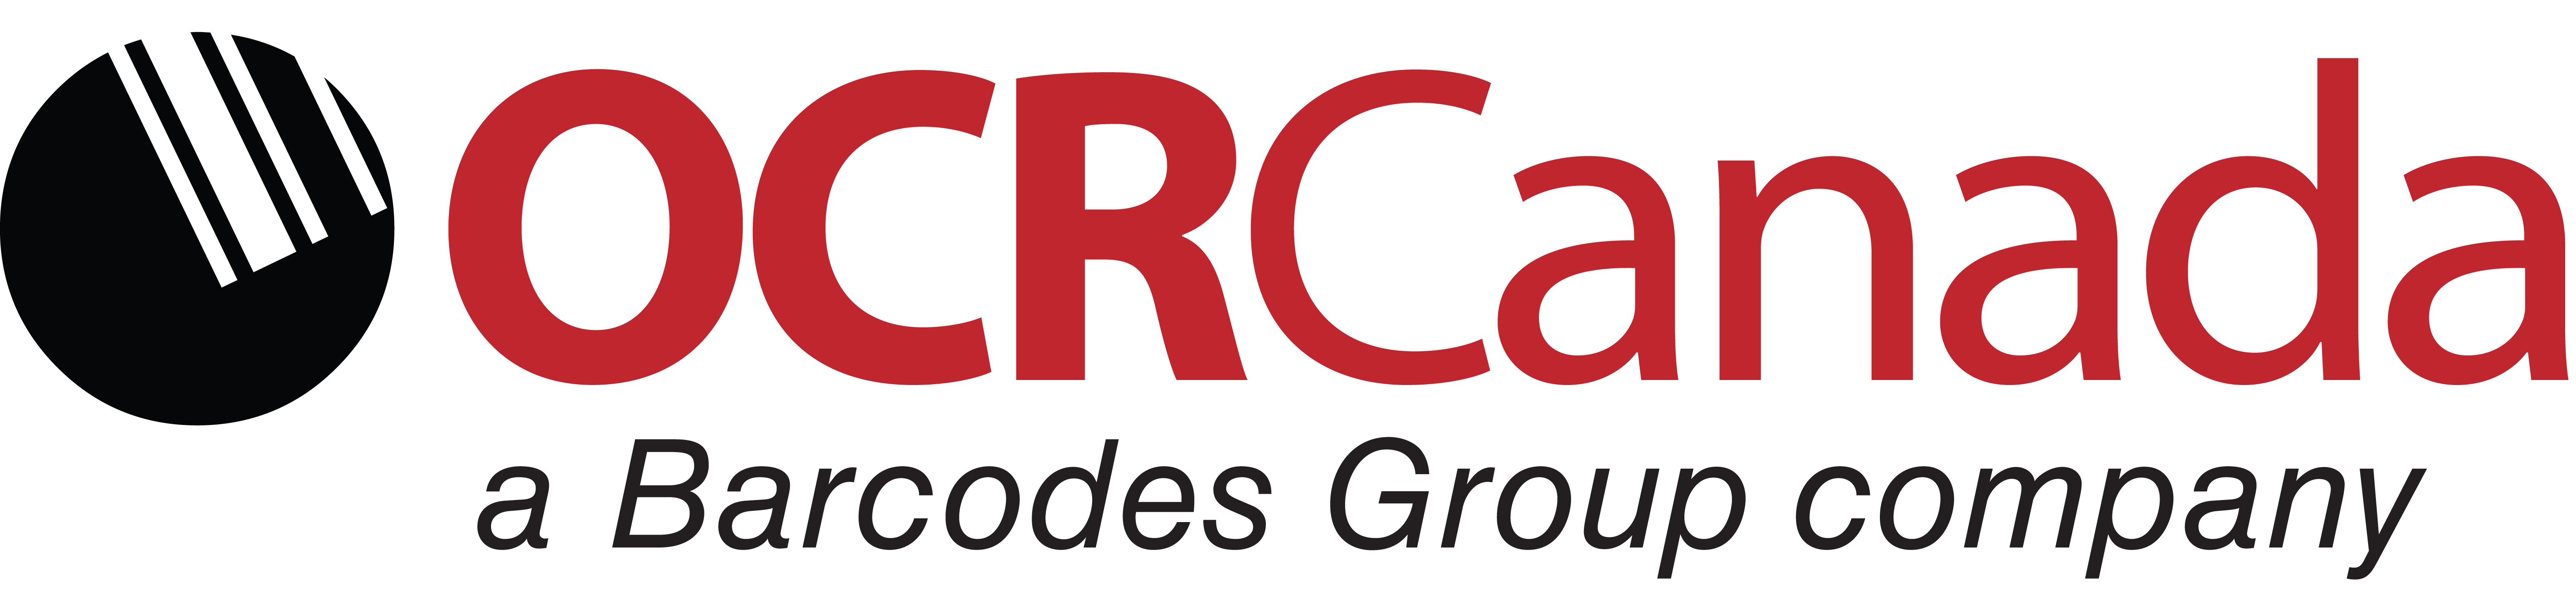 OCR Canada Ltd (a Barcodes Group company)